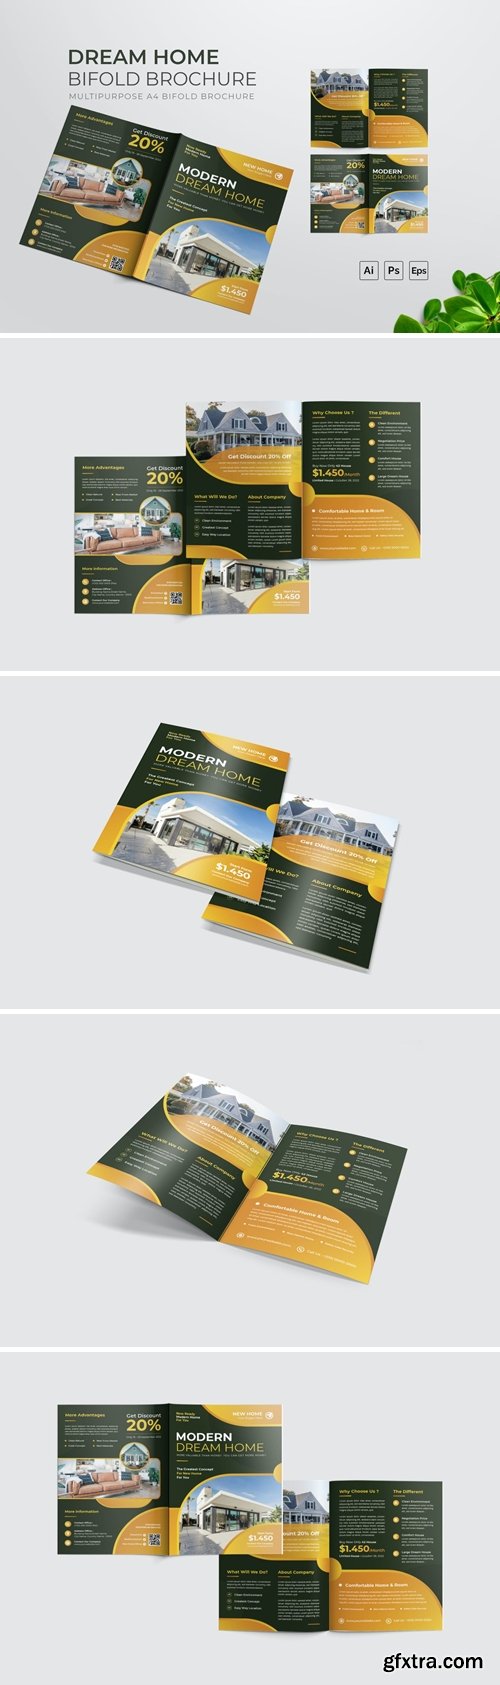 Dream Home Bifold Brochure